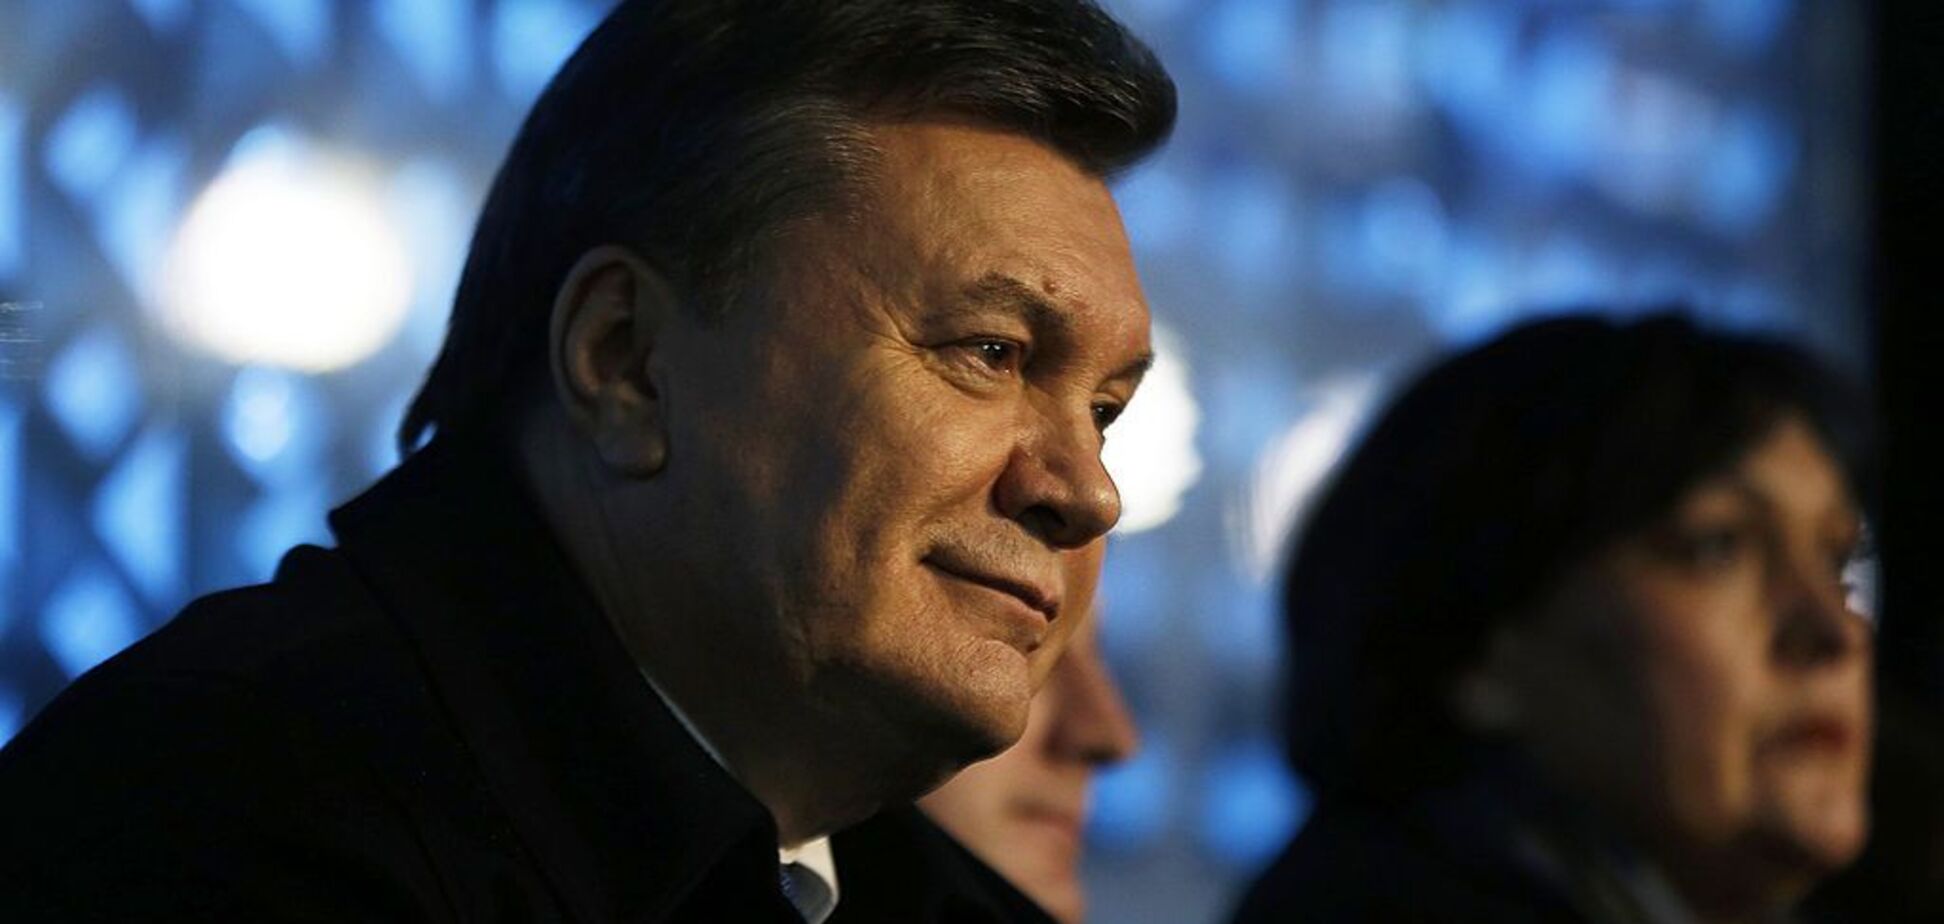 Портников объяснил, почему Москва вцепилась за Януковича